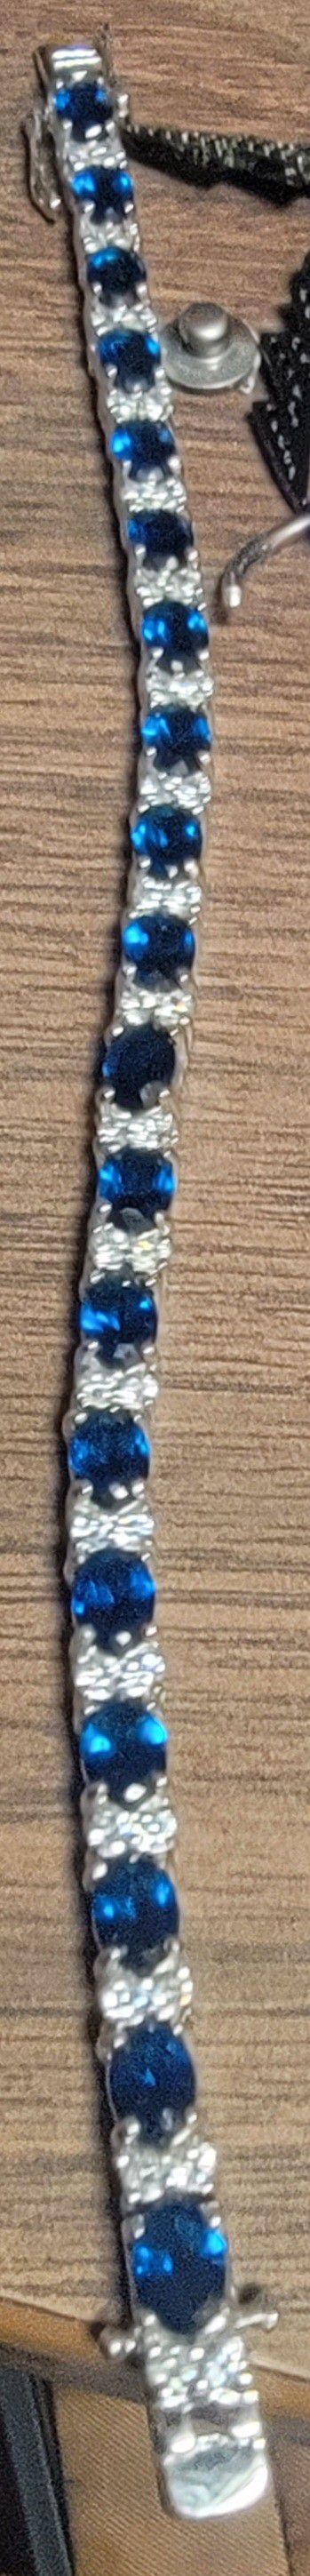 14 1/4 CT TGW Created Blue & White Sapphire Bracelet in Sterling Silver

$130